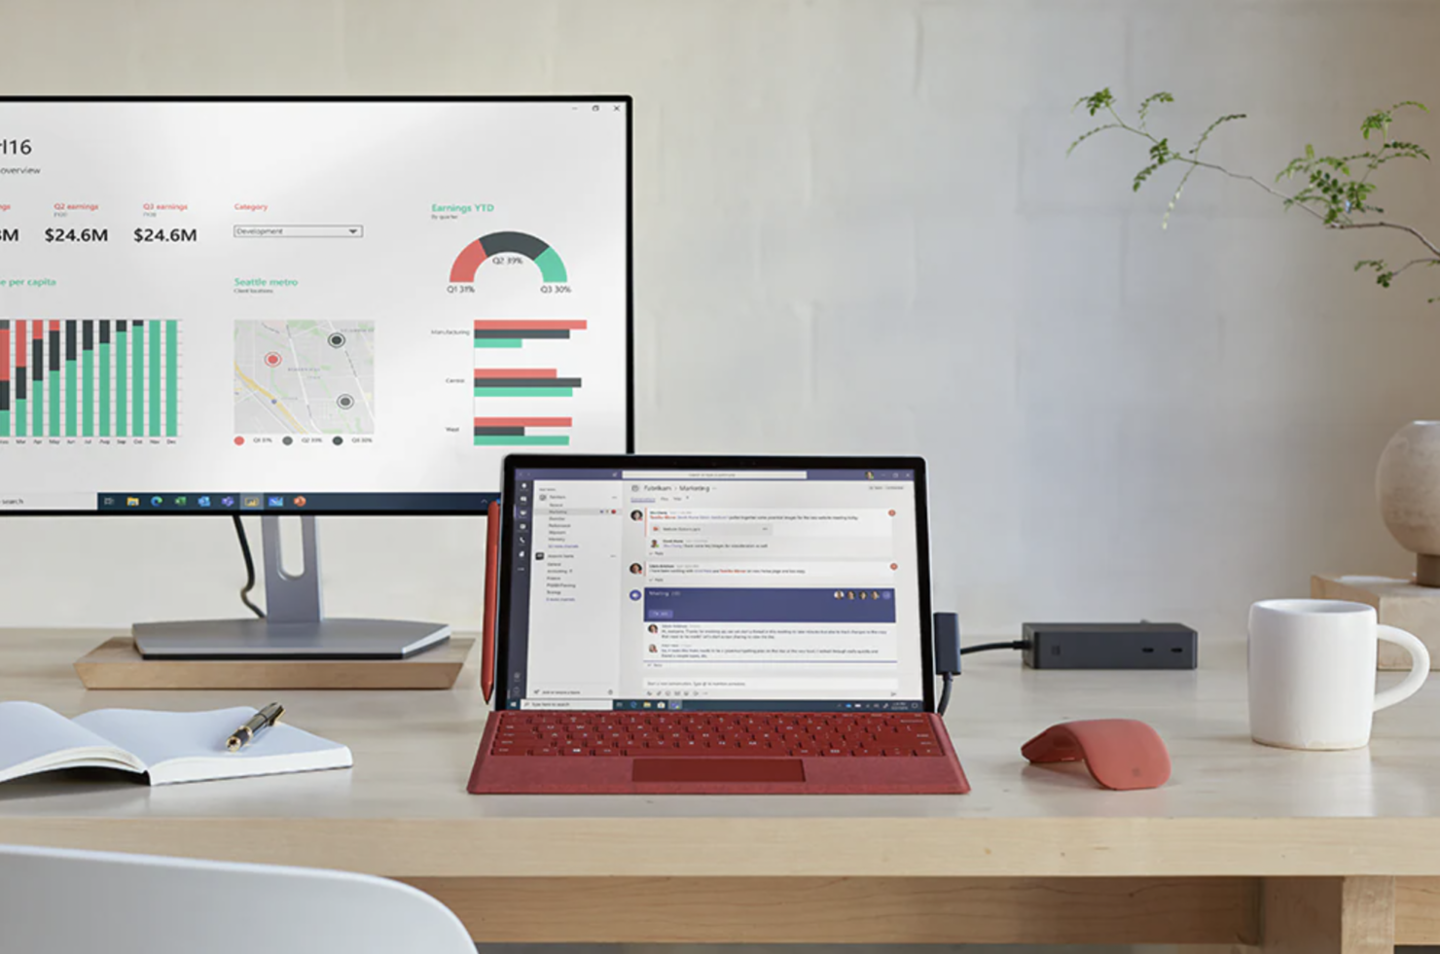 微软 Surface Laptop 2/Pro 7+ 10 月固件更新：提高性能和稳定性